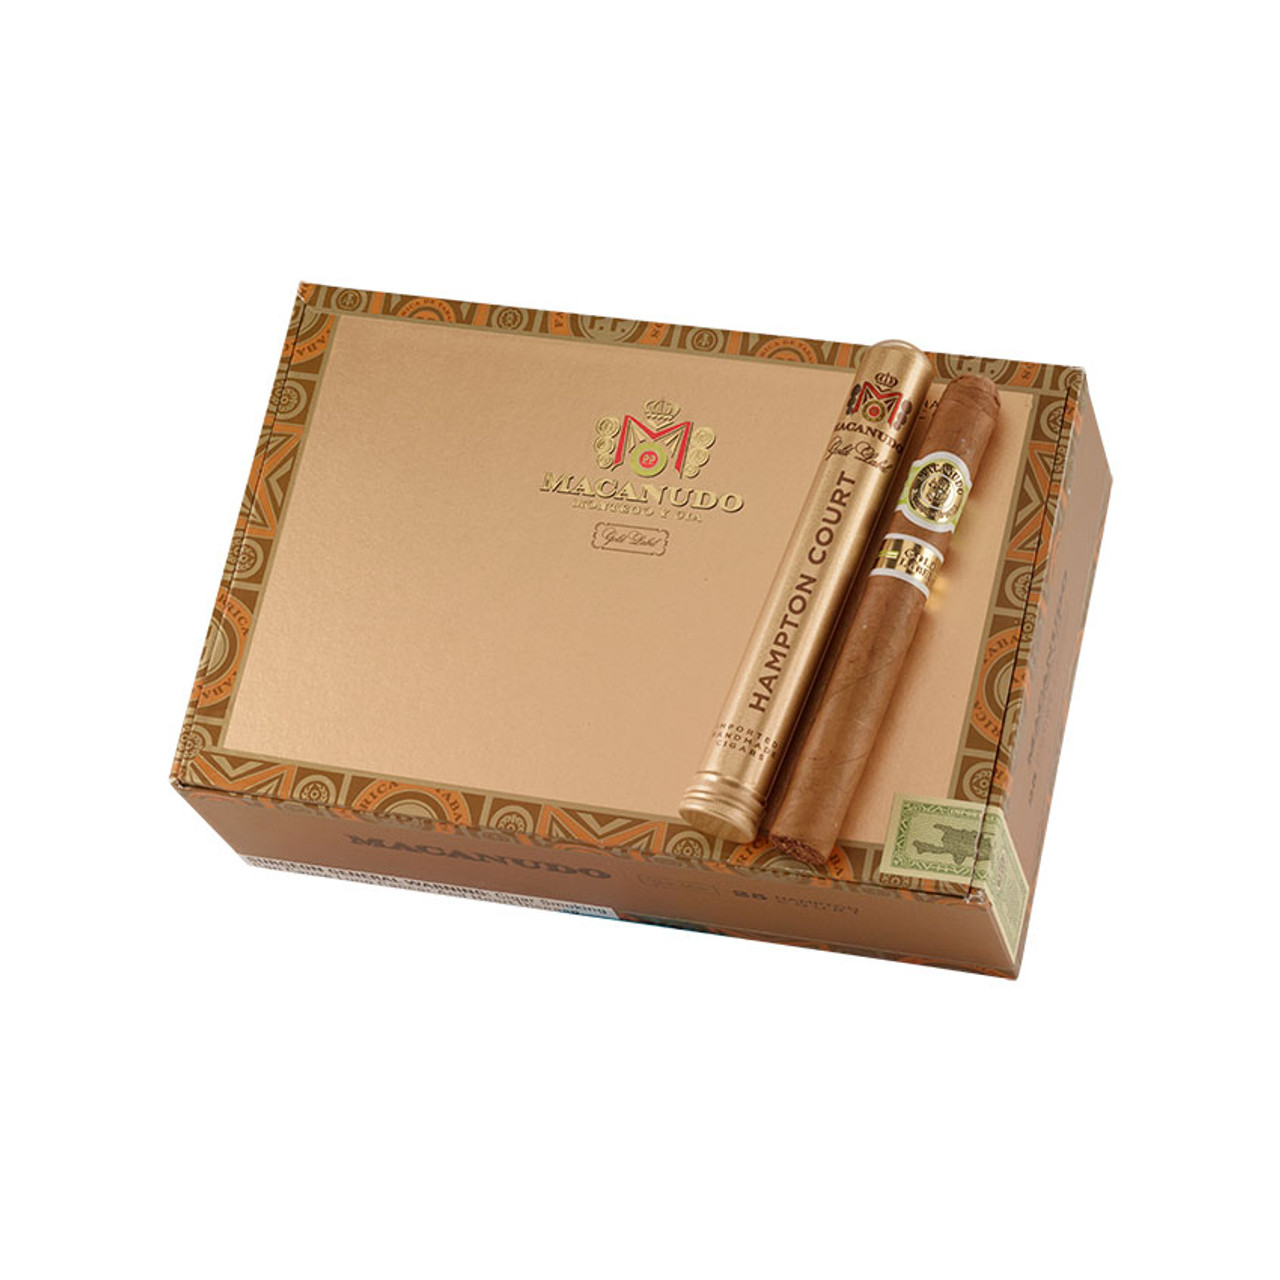 Macanudo Gold Hampton Court Tubed Cigars - 5.5 x 42 (Box of 25) *Box